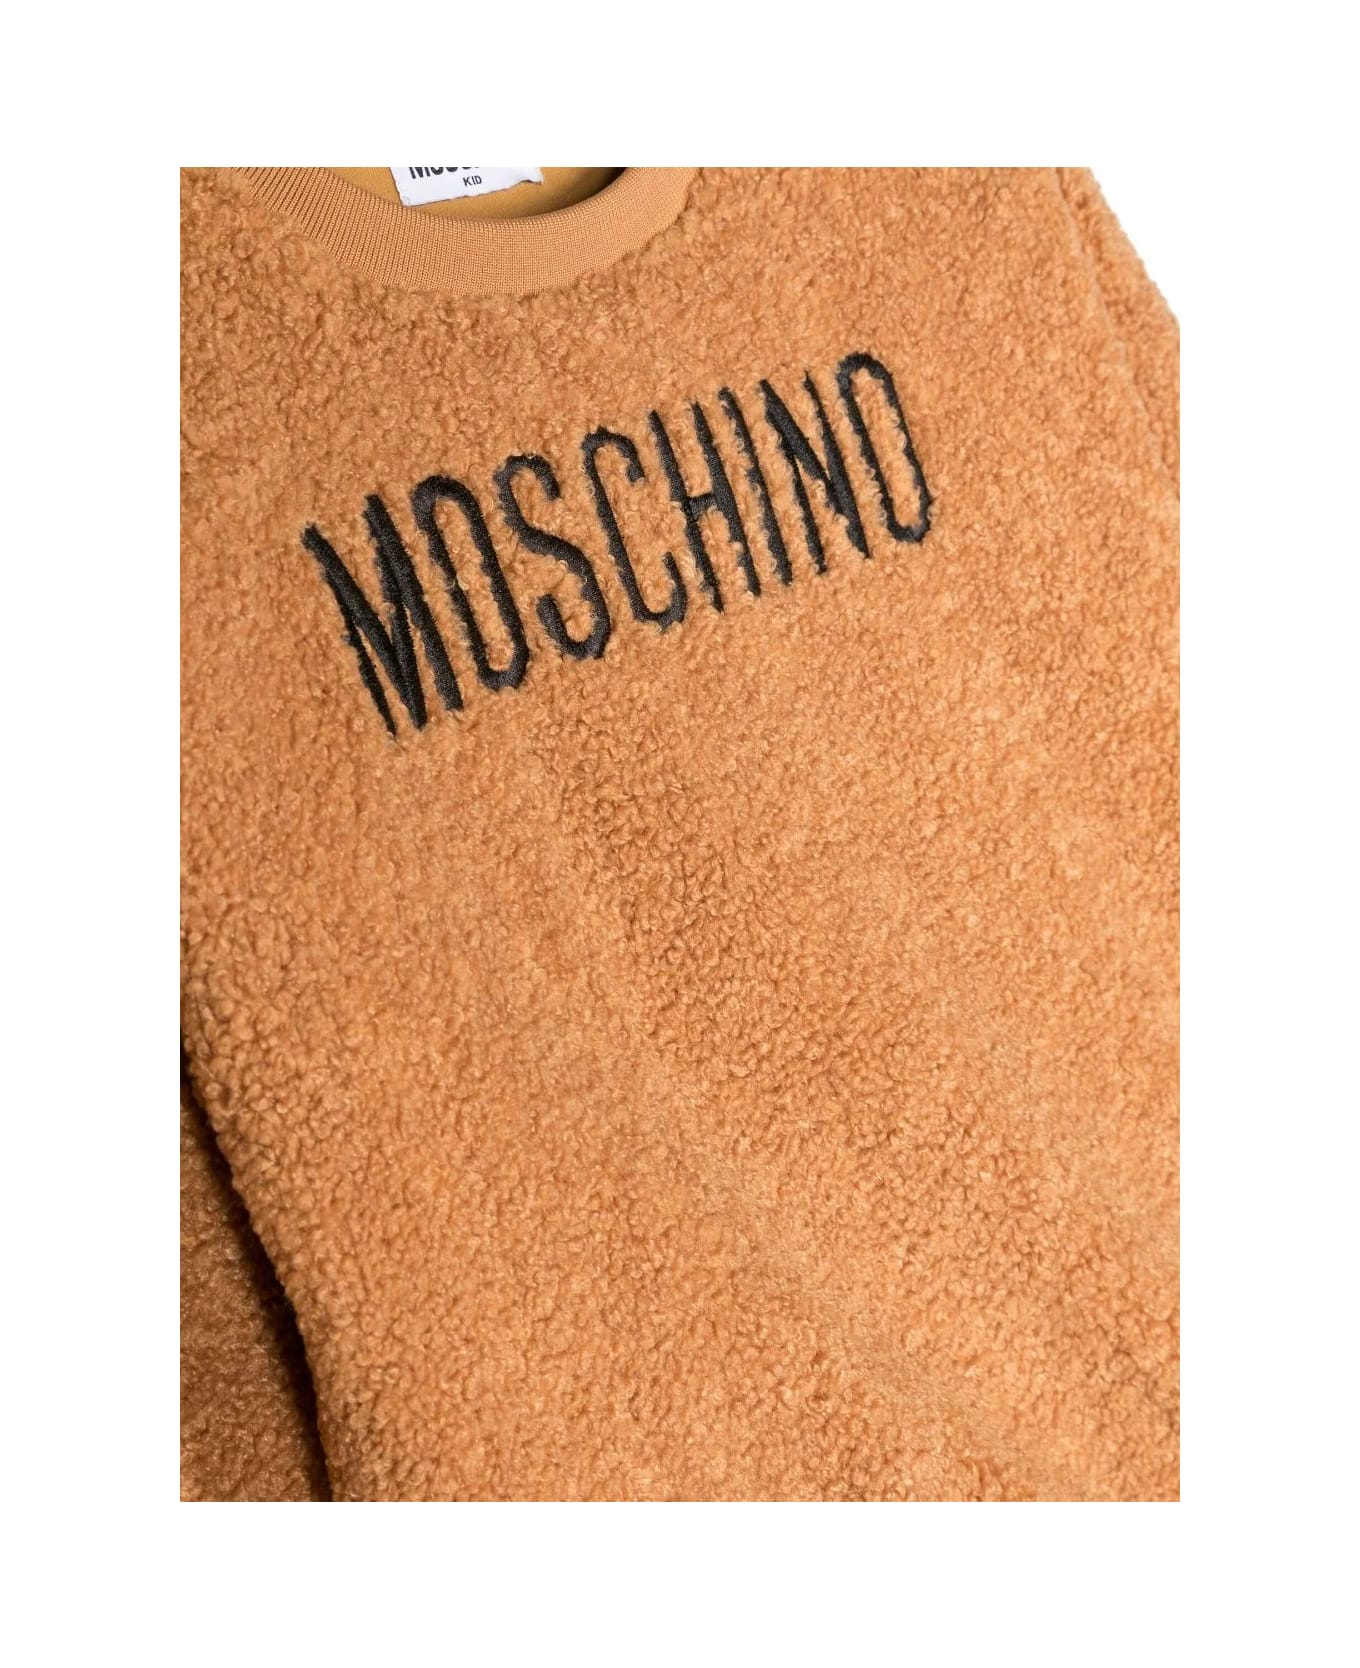 Moschino Teddy Bear Sweatshirt In Caramel Colour - BROWN ニットウェア＆スウェットシャツ